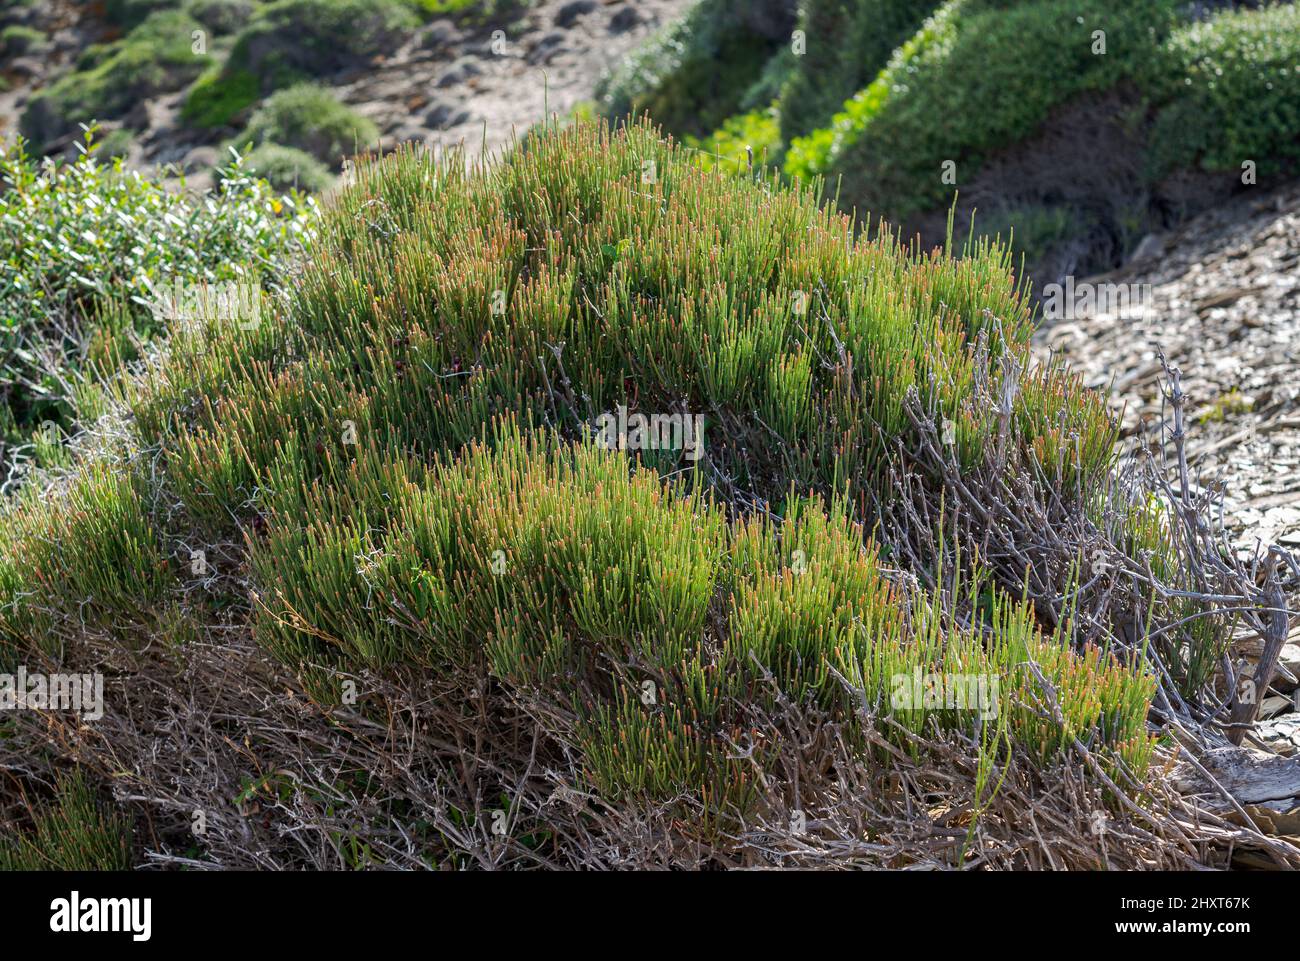 Joint Pine, Ephedra fragilis. Photo taken in the municipality of Mahon, Menorca, Spain Stock Photo